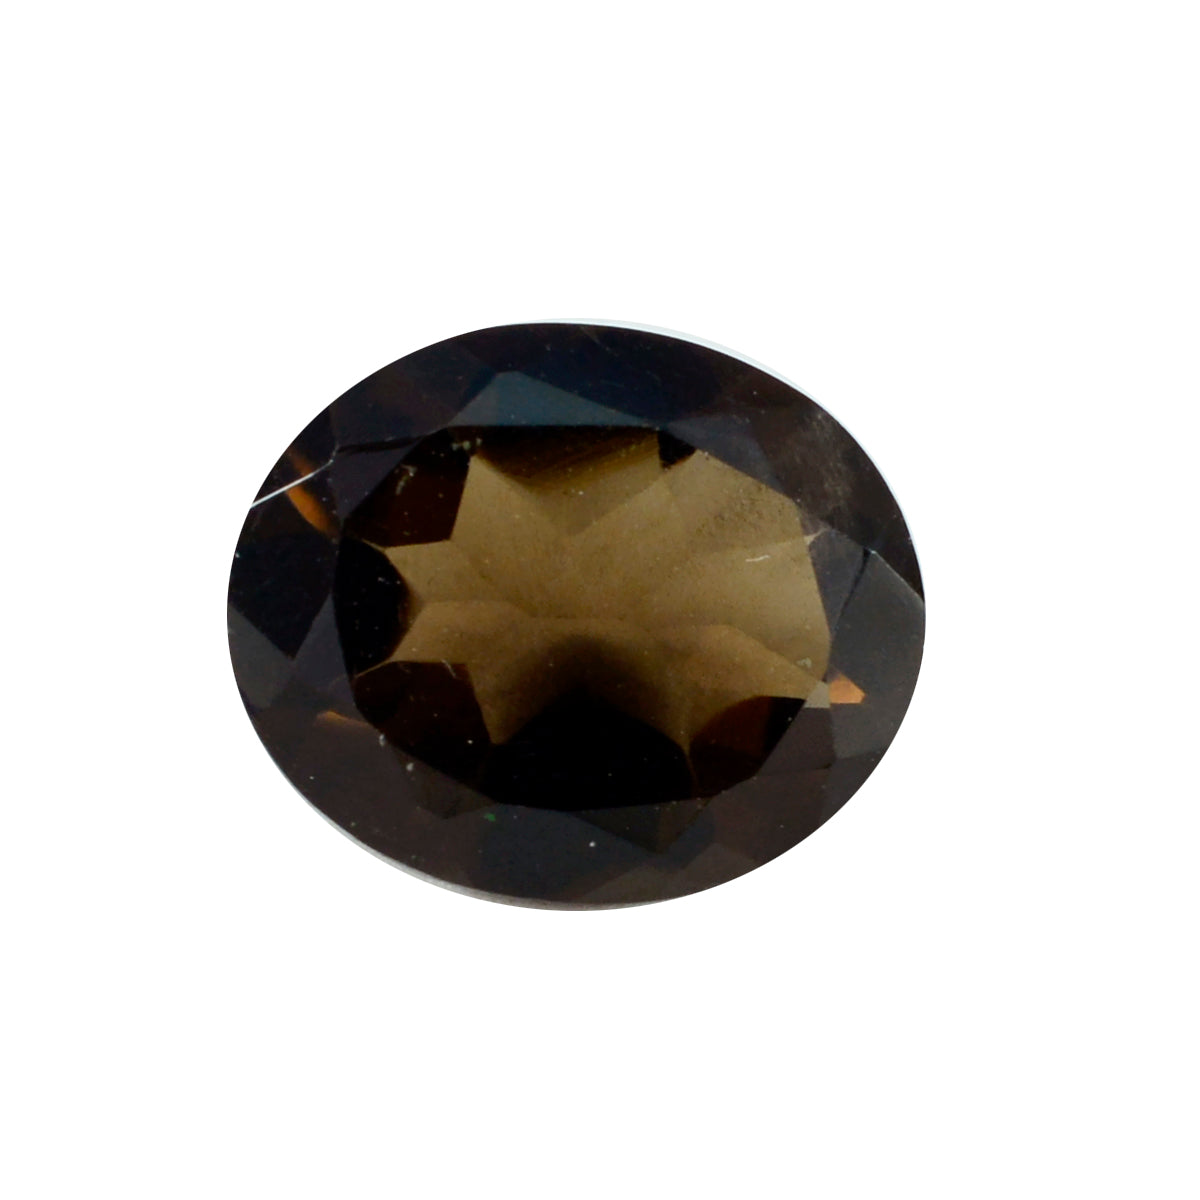 Riyogems 1PC Genuine Brown Smoky Quartz Faceted 12x16 mm Oval Shape wonderful Quality Gems